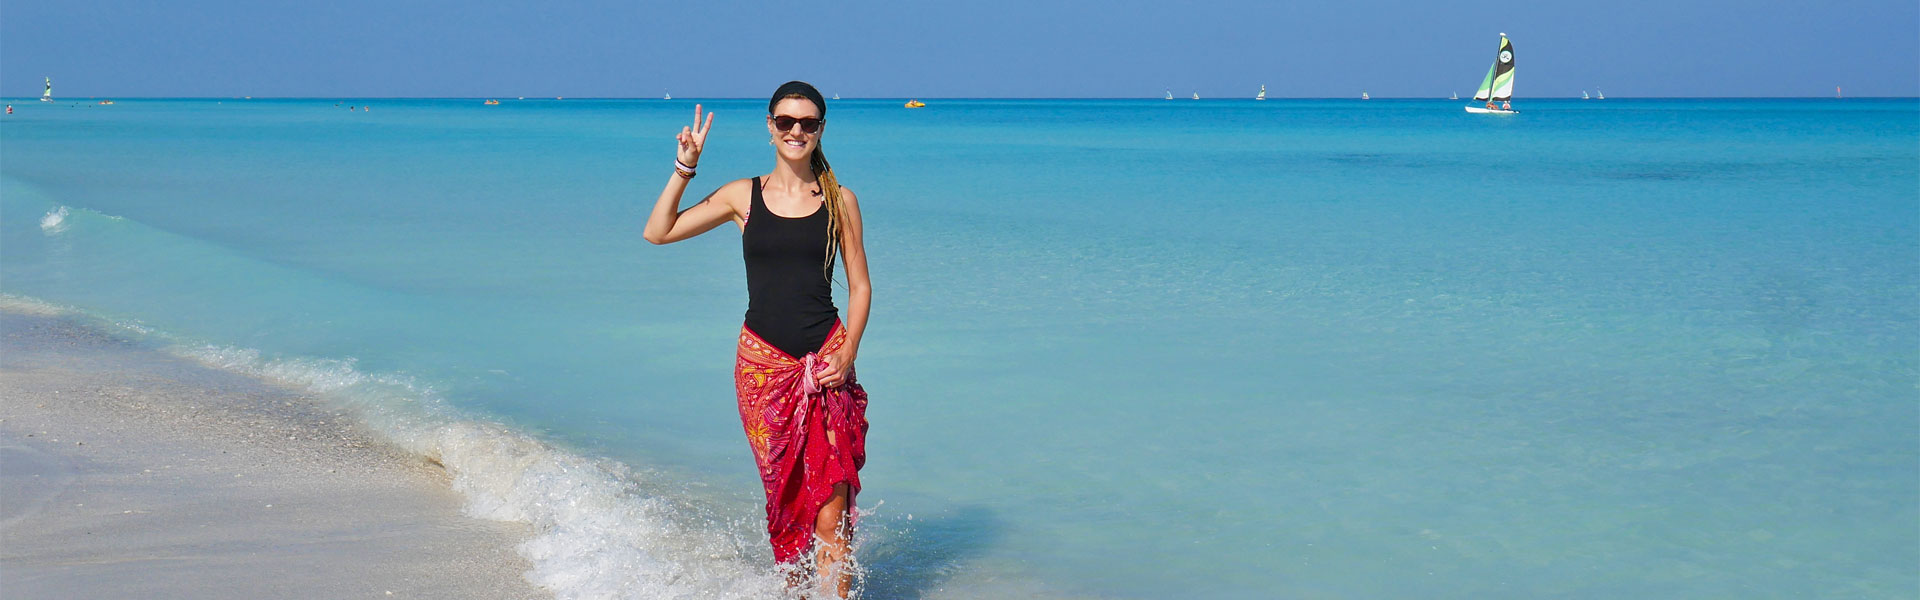 Rasta girl showing peace sign at Varadero beach, Cuba